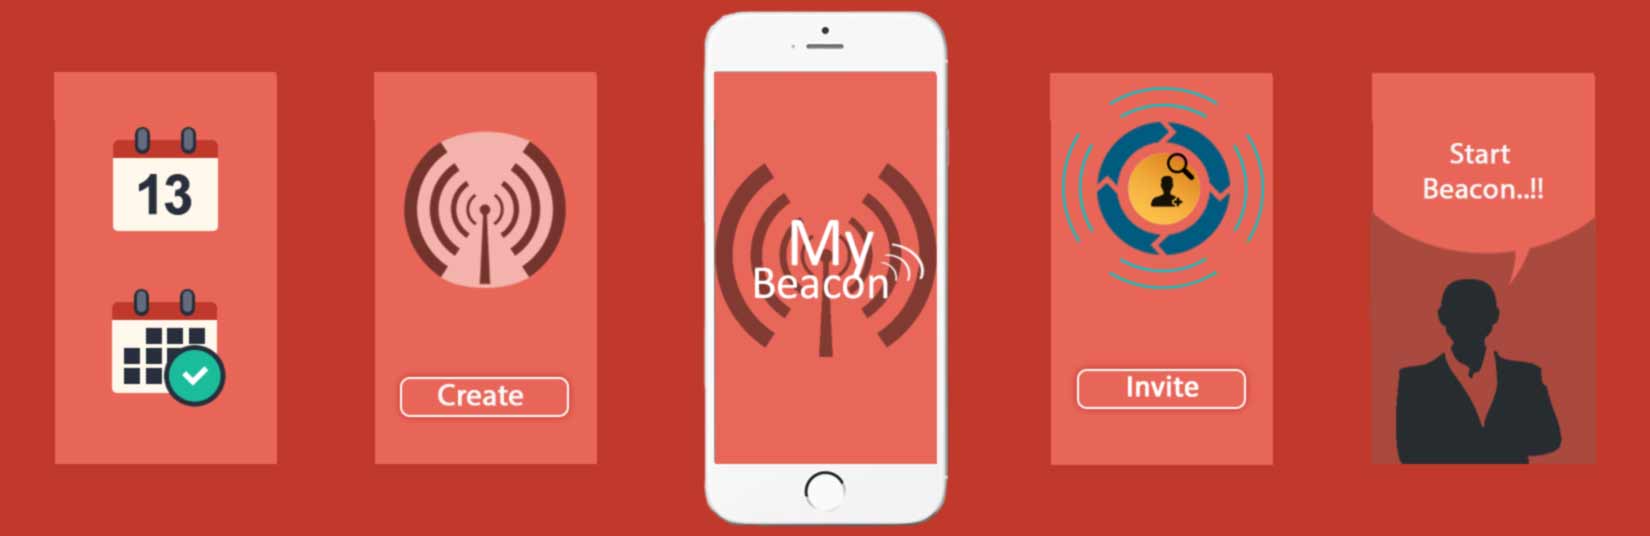 Beacon App That Follows Your Commands